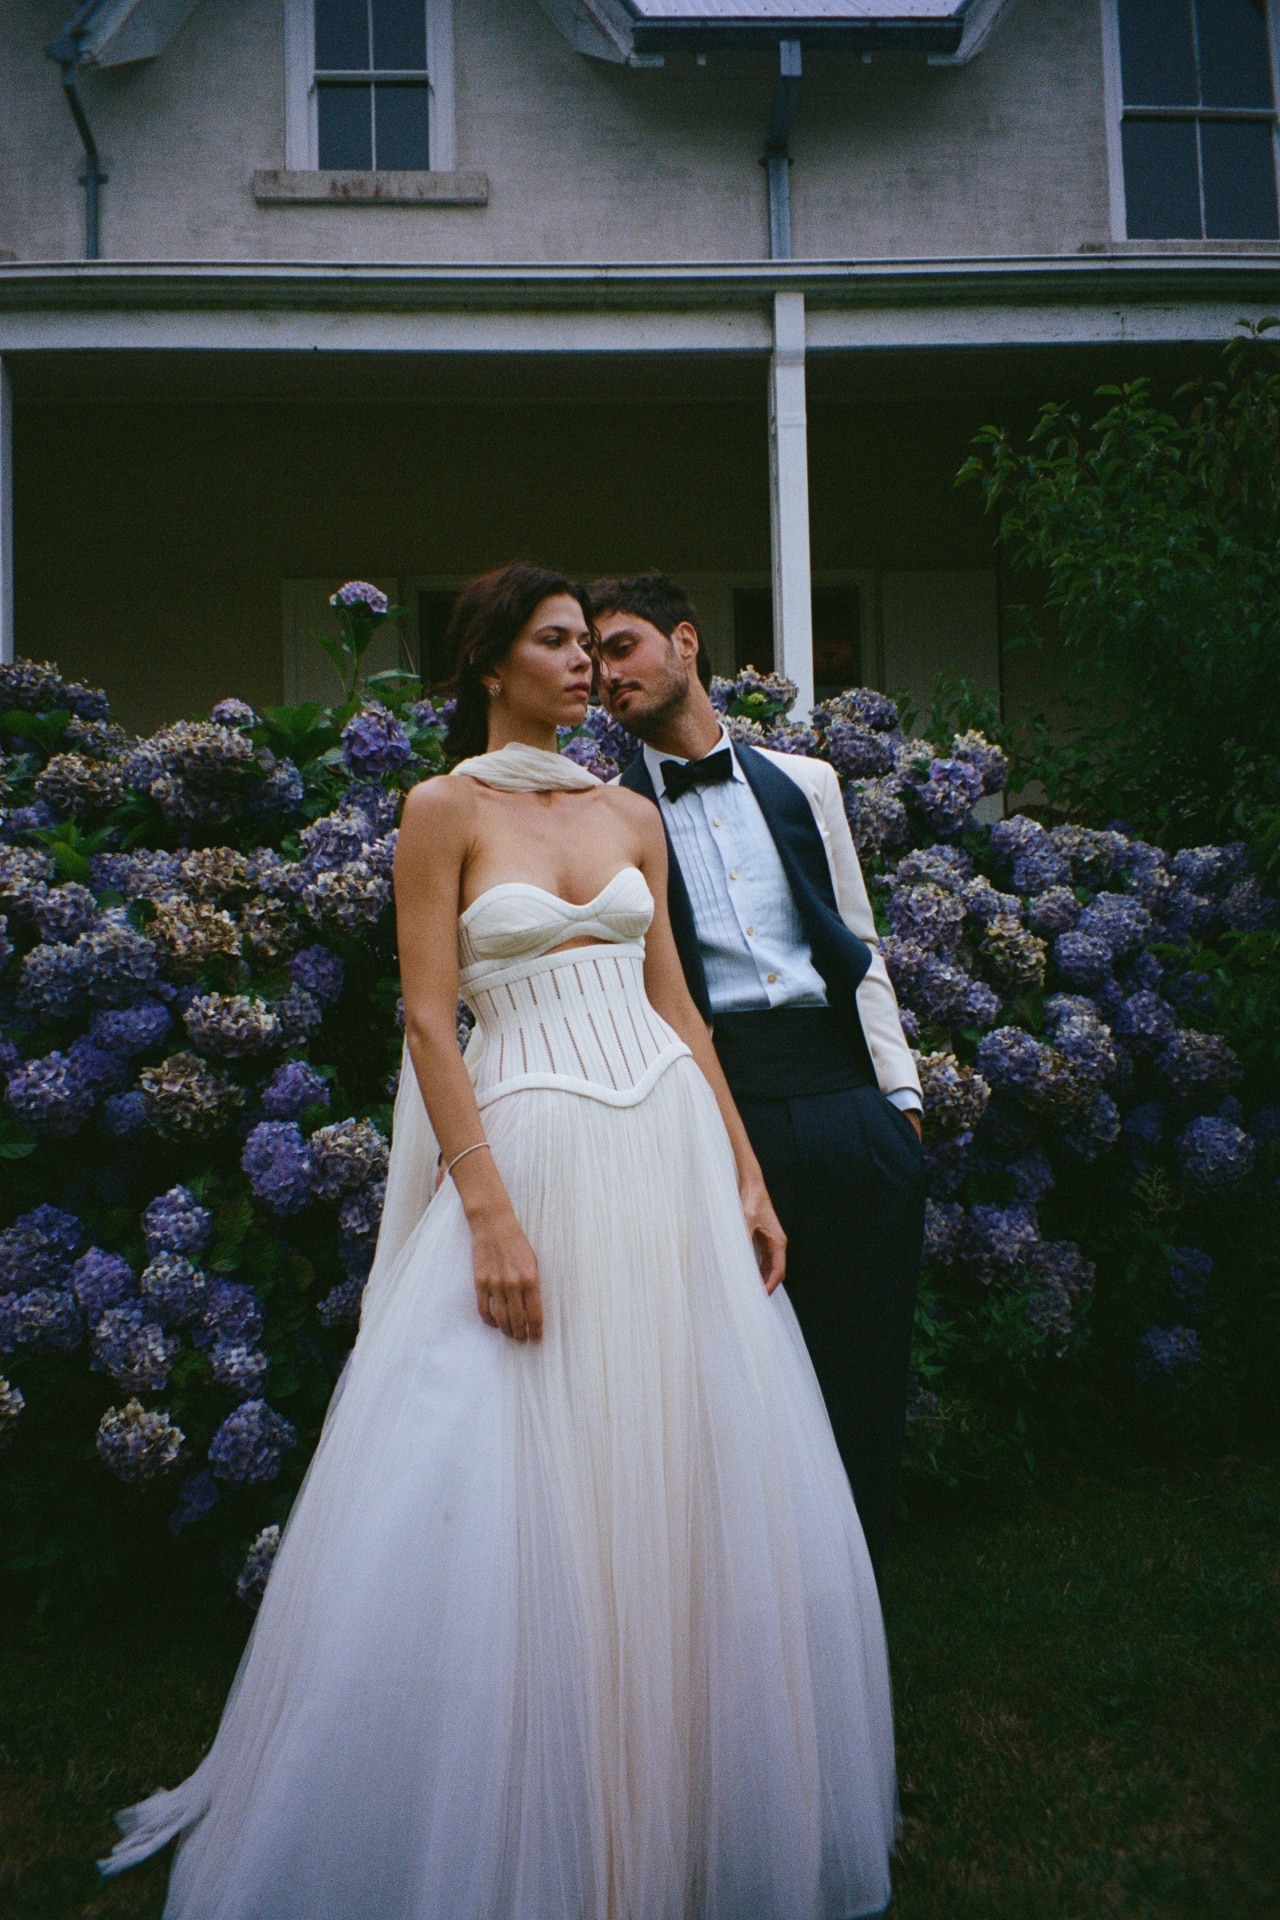 Best Strapless Bra For Wedding Dress - Shop on Pinterest